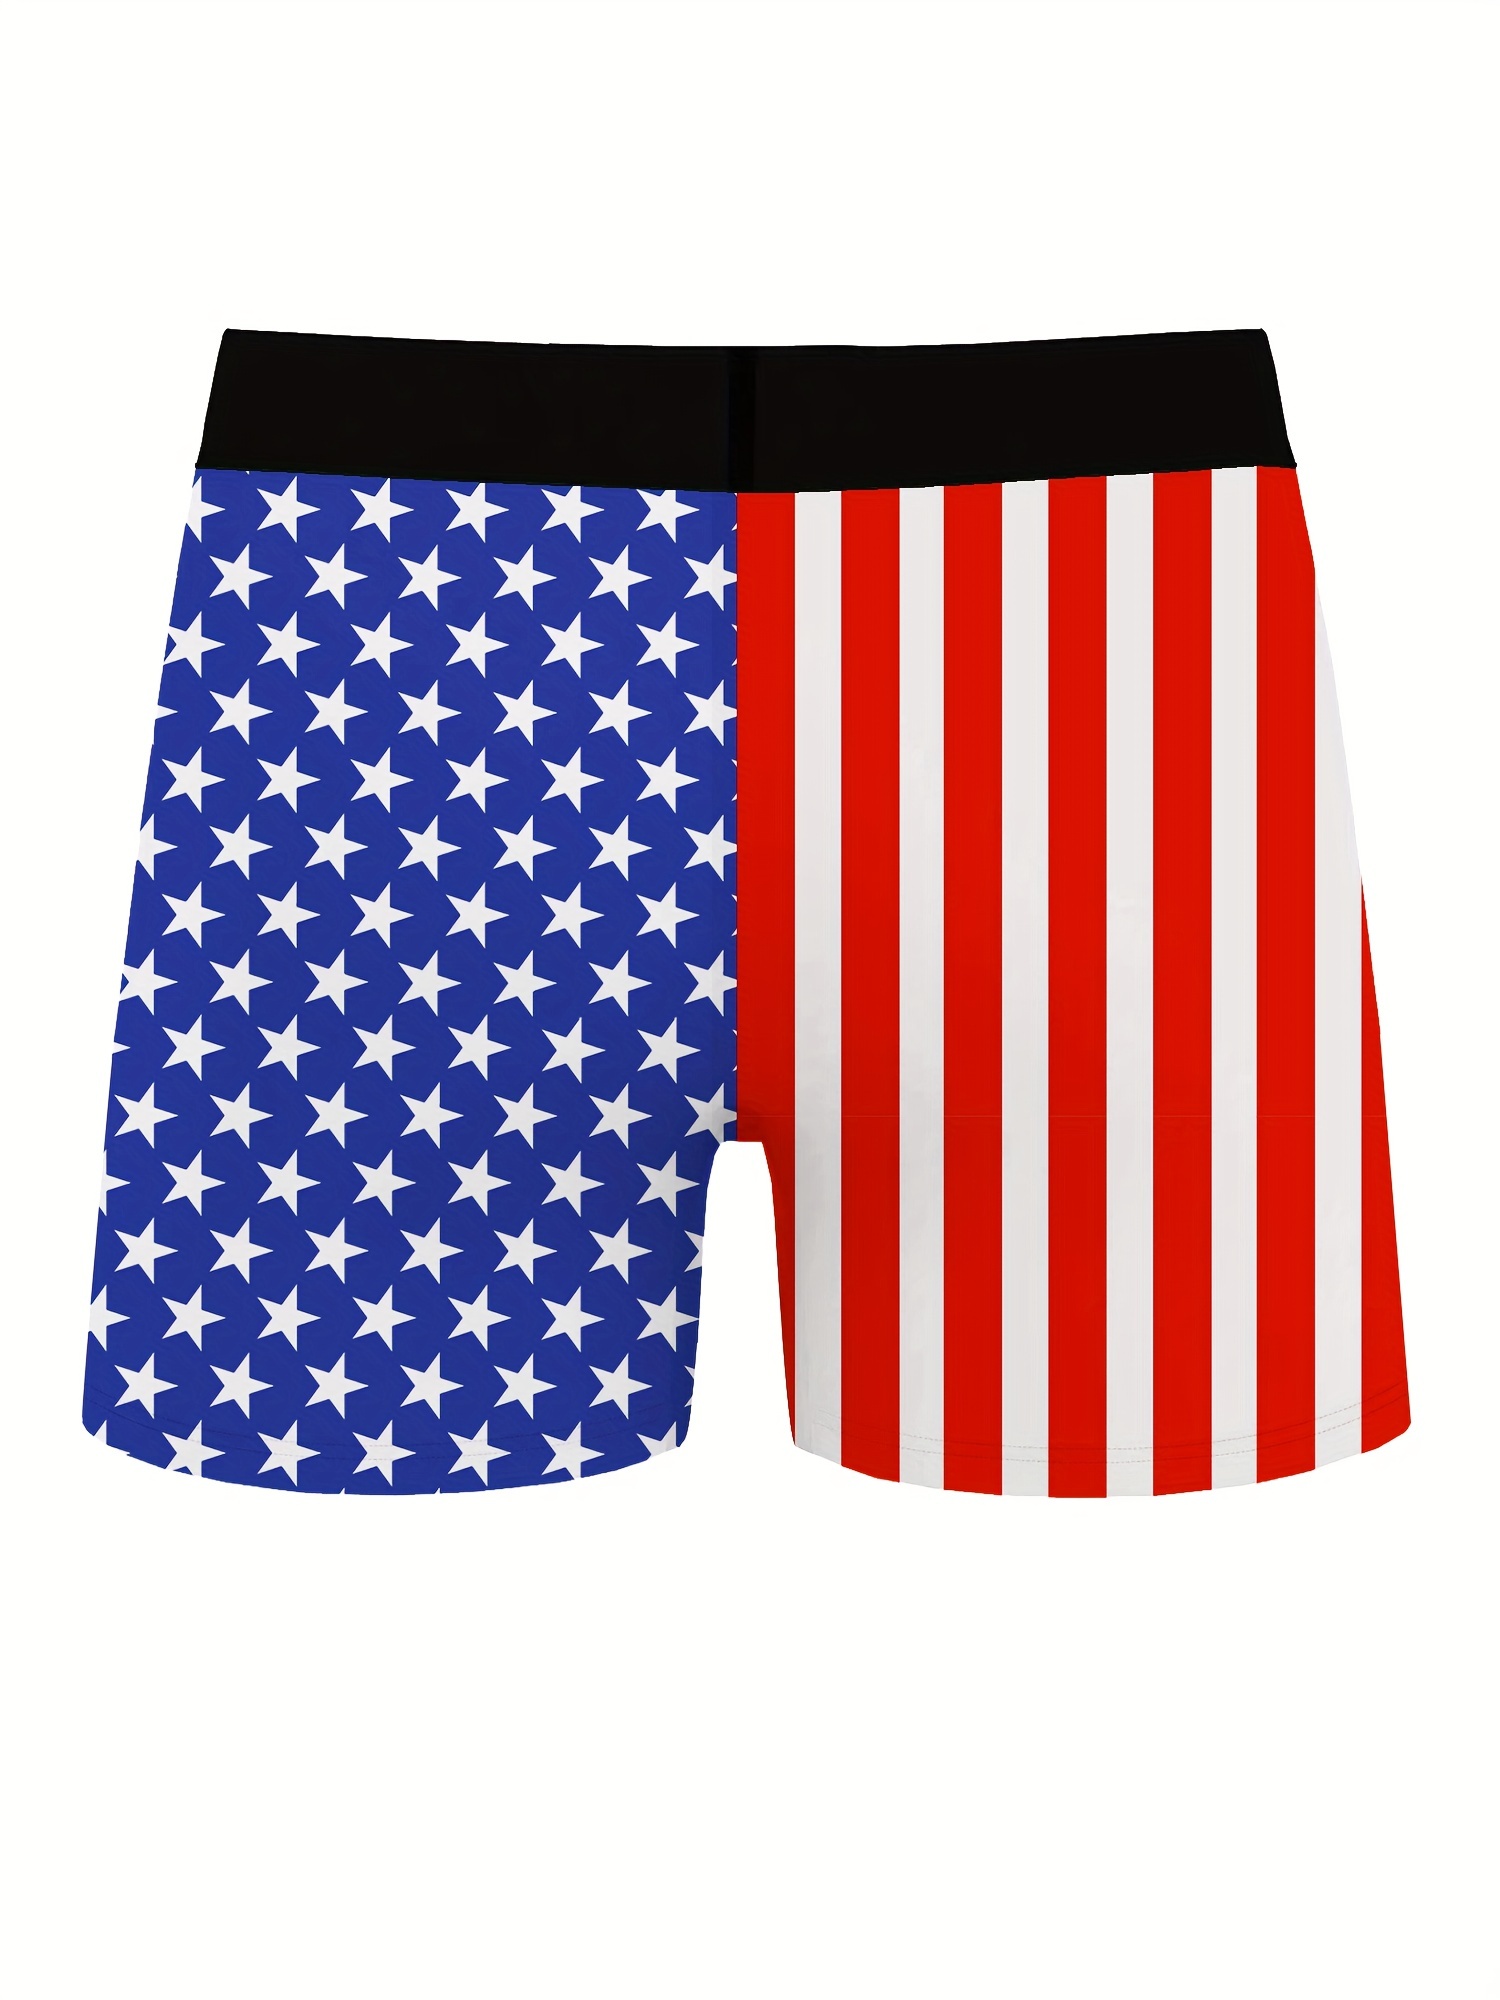 FreeGun FreeGun Boxershorts Underwear American Flag Men Cotton